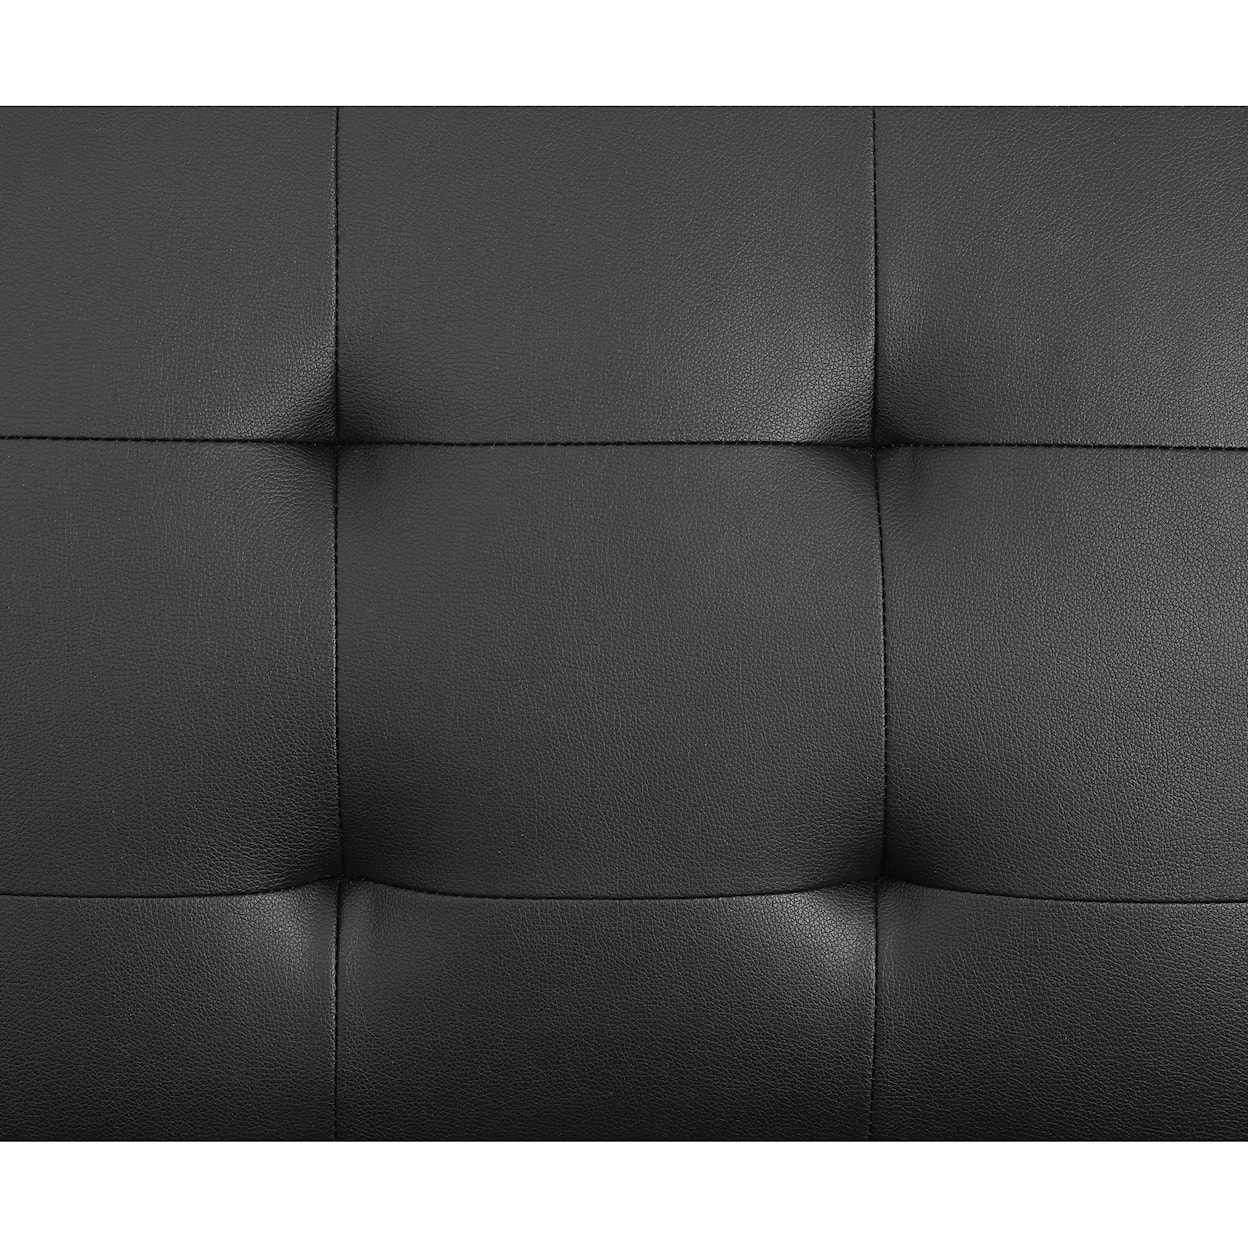 Acme Furniture Essick II Sectional Sofa